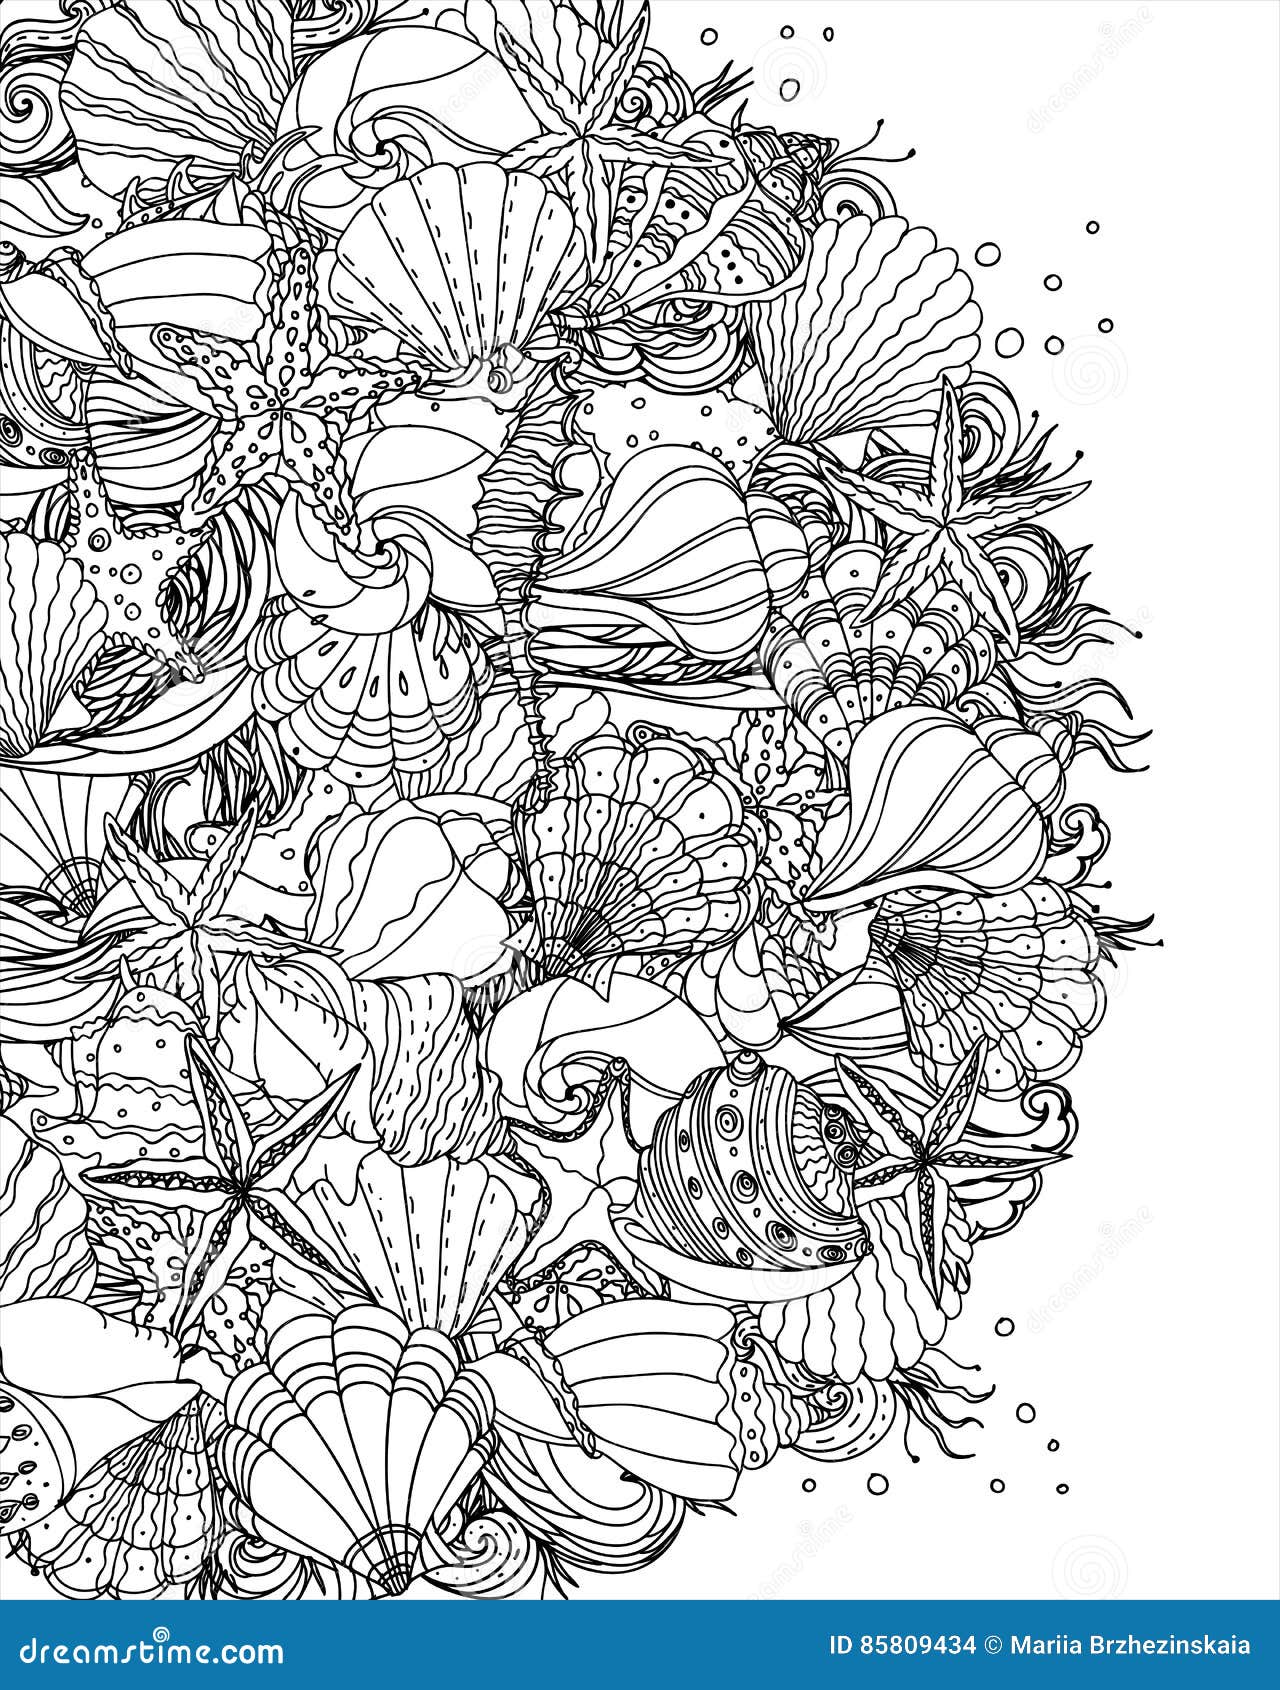 Seashell pattern art background stock vector